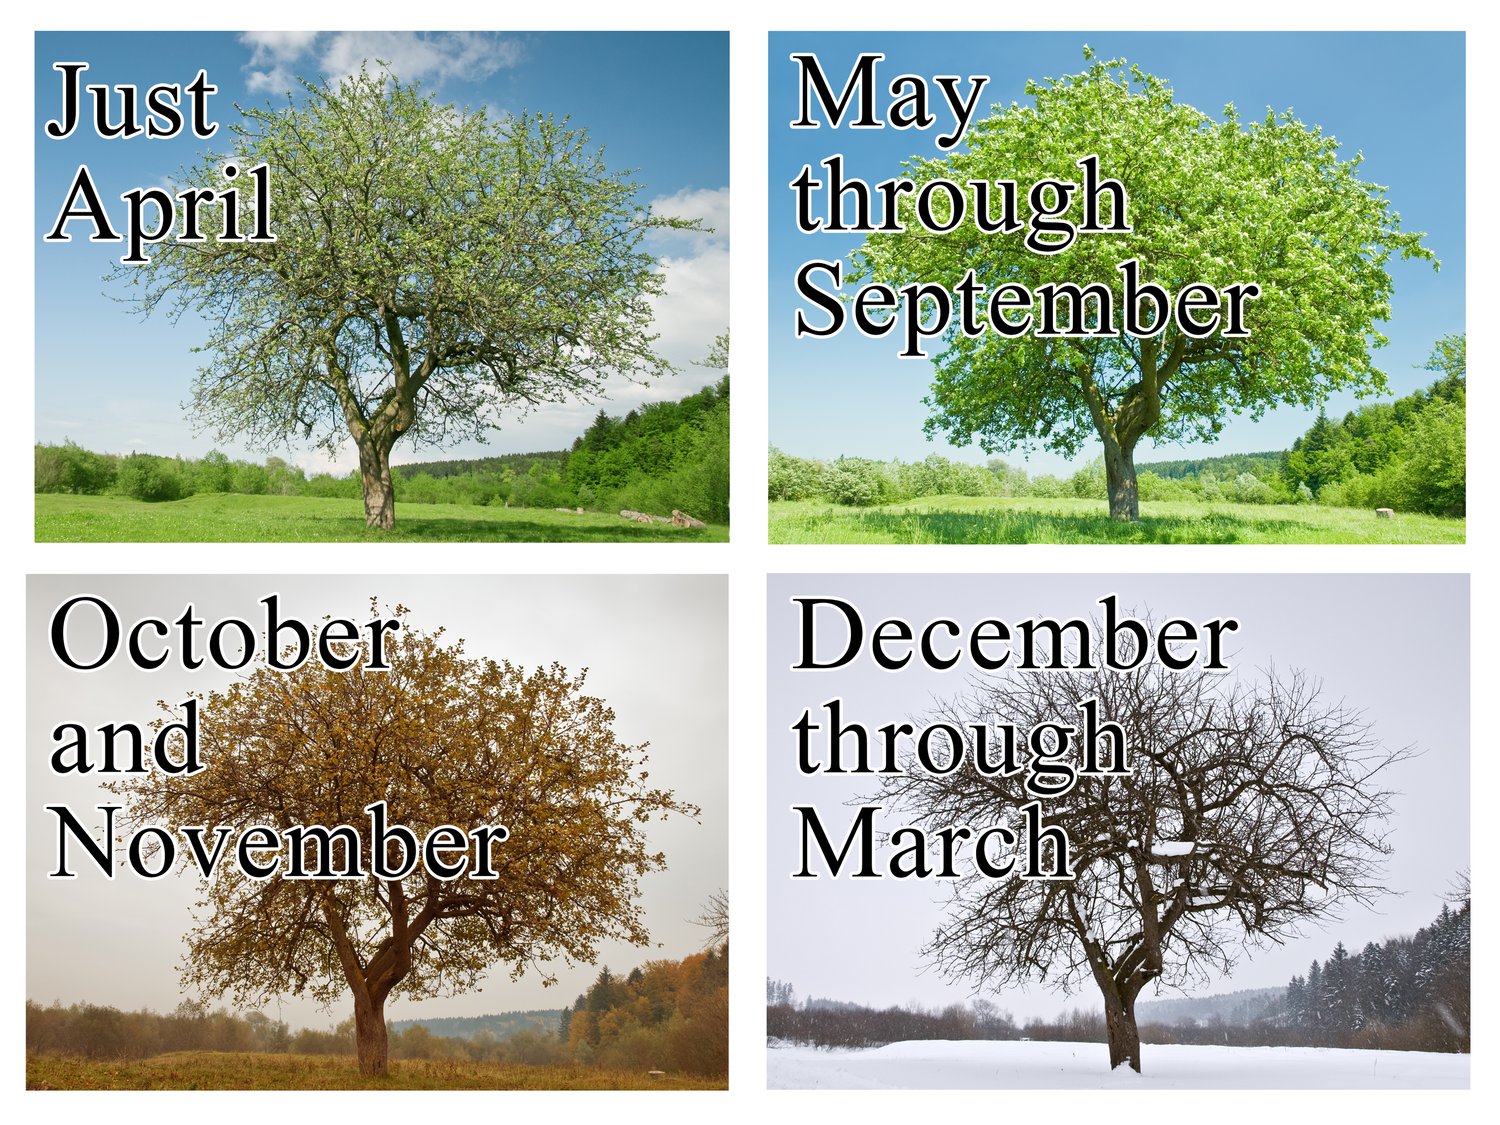 Image of 2024 Honest Calendar